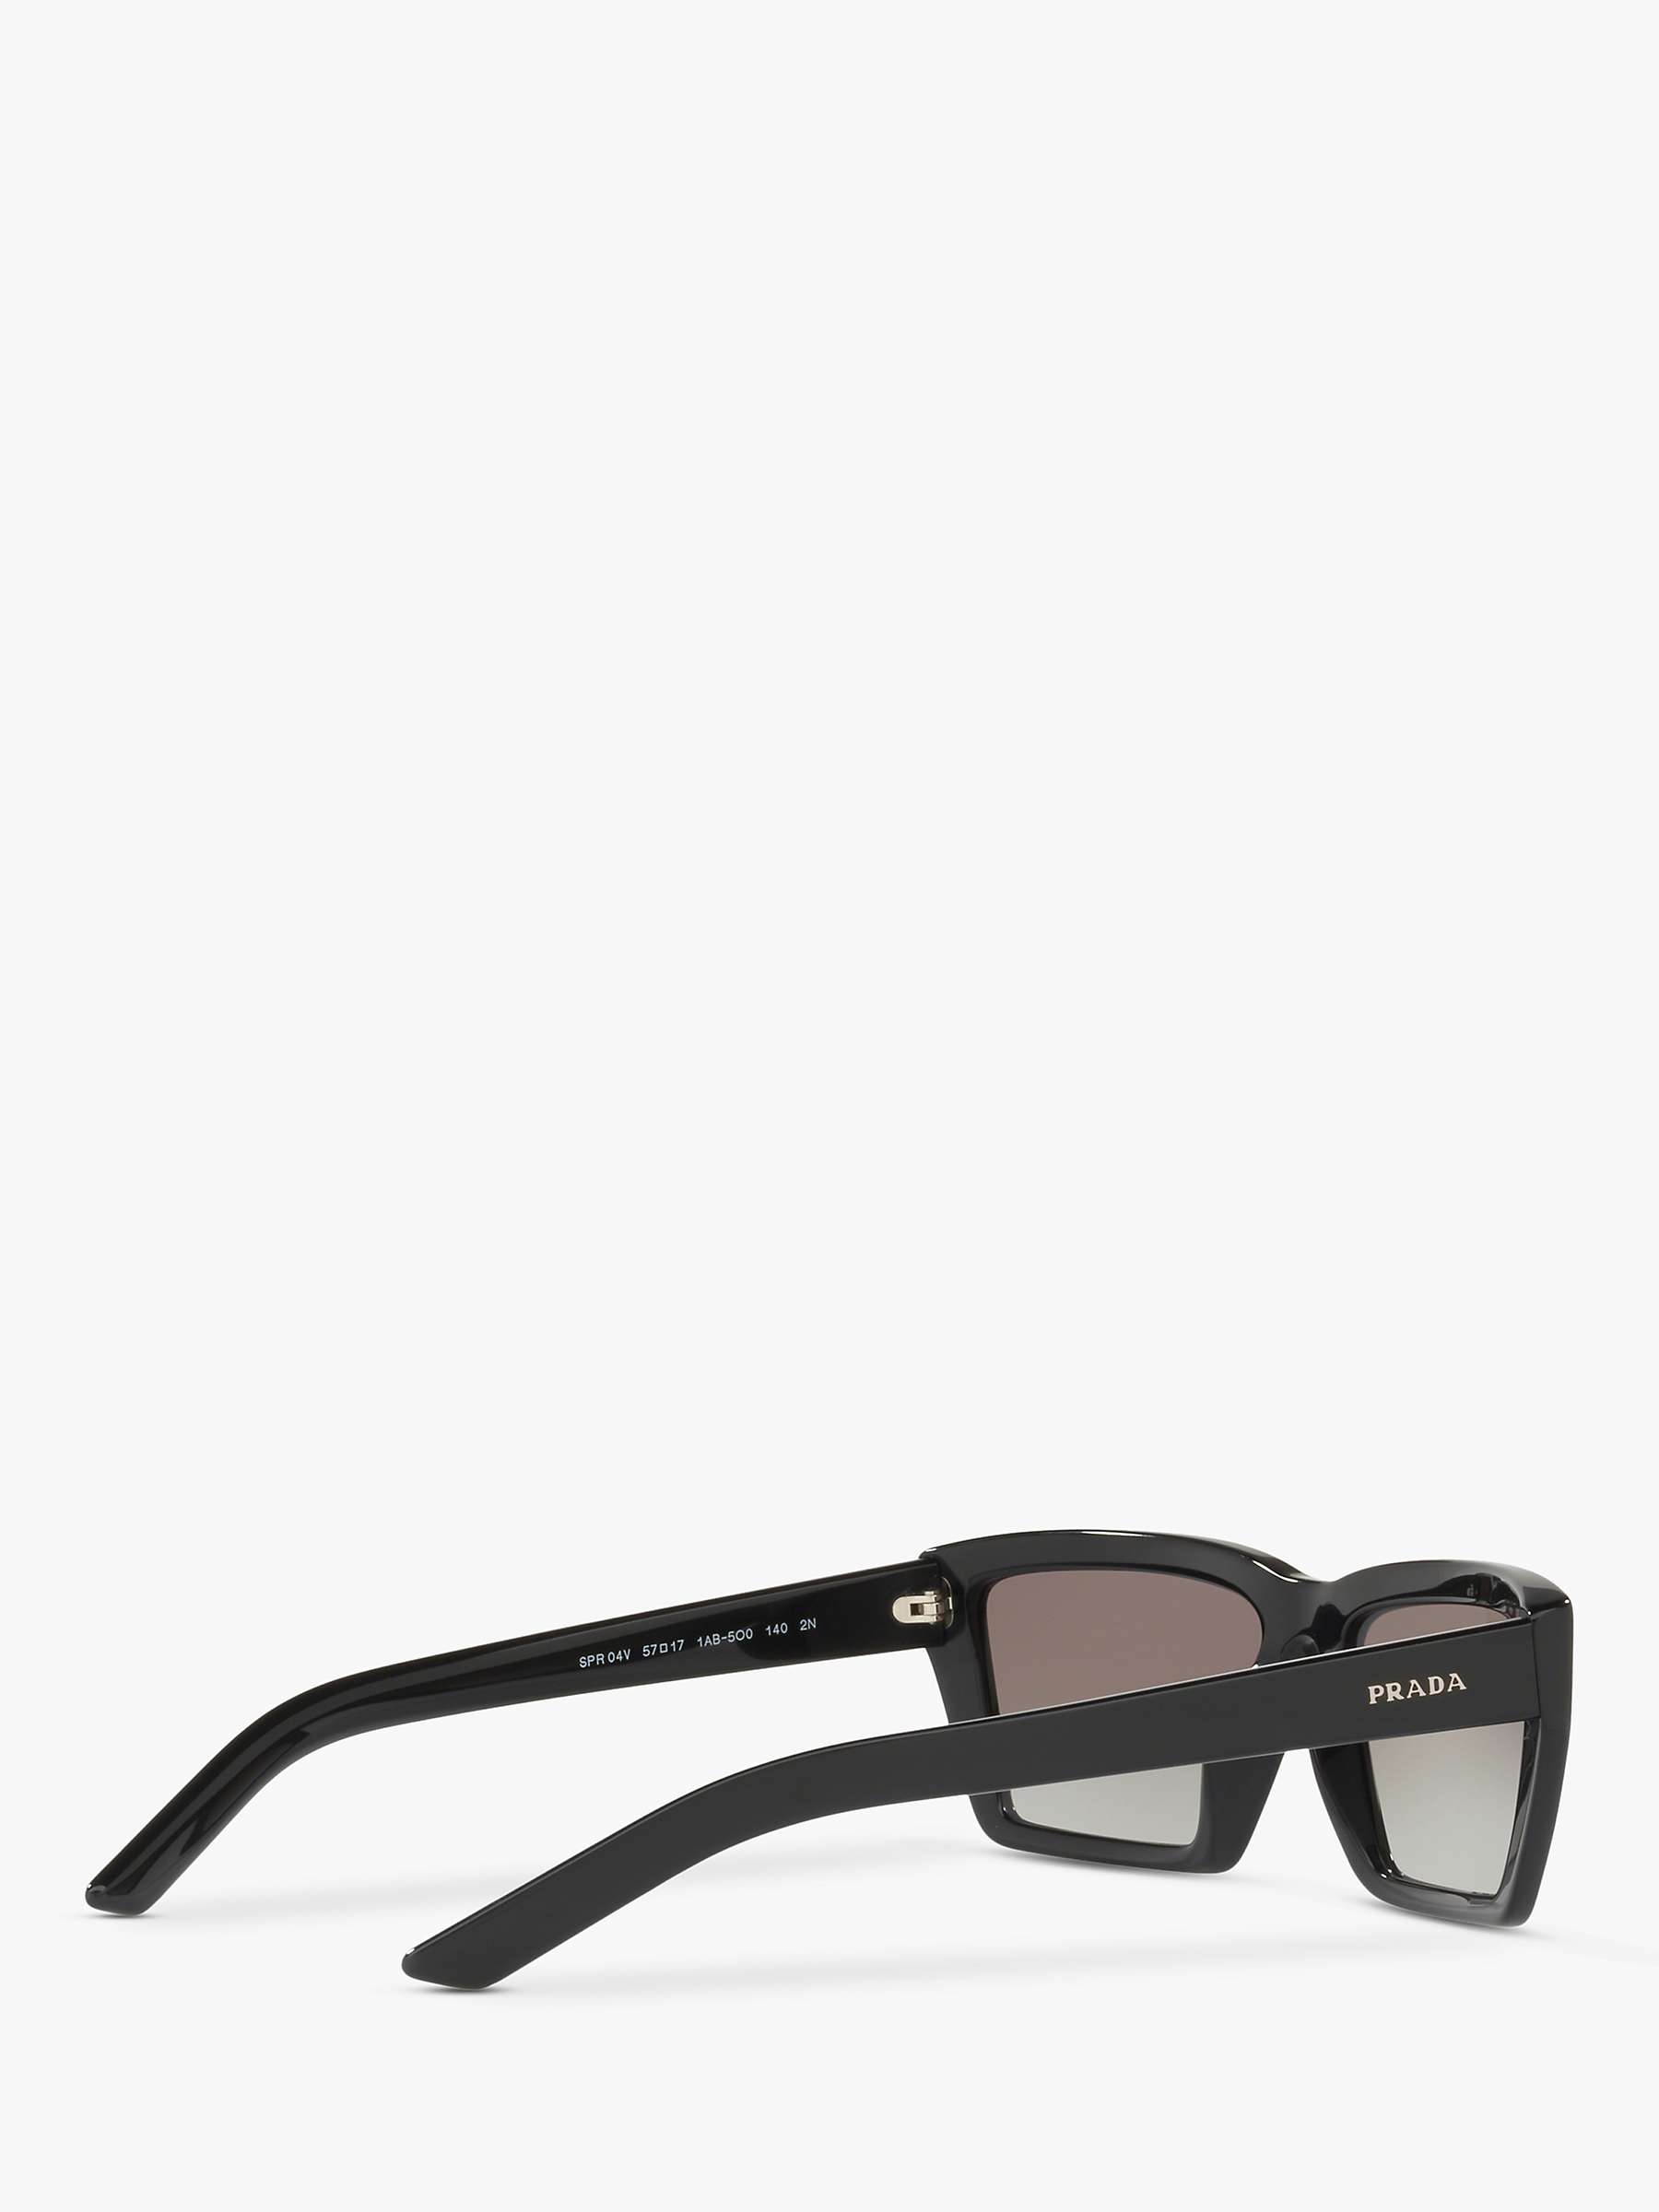 Prada PR 04VS Women's Rectangular Sunglasses, Matte Black/Grey Gradient